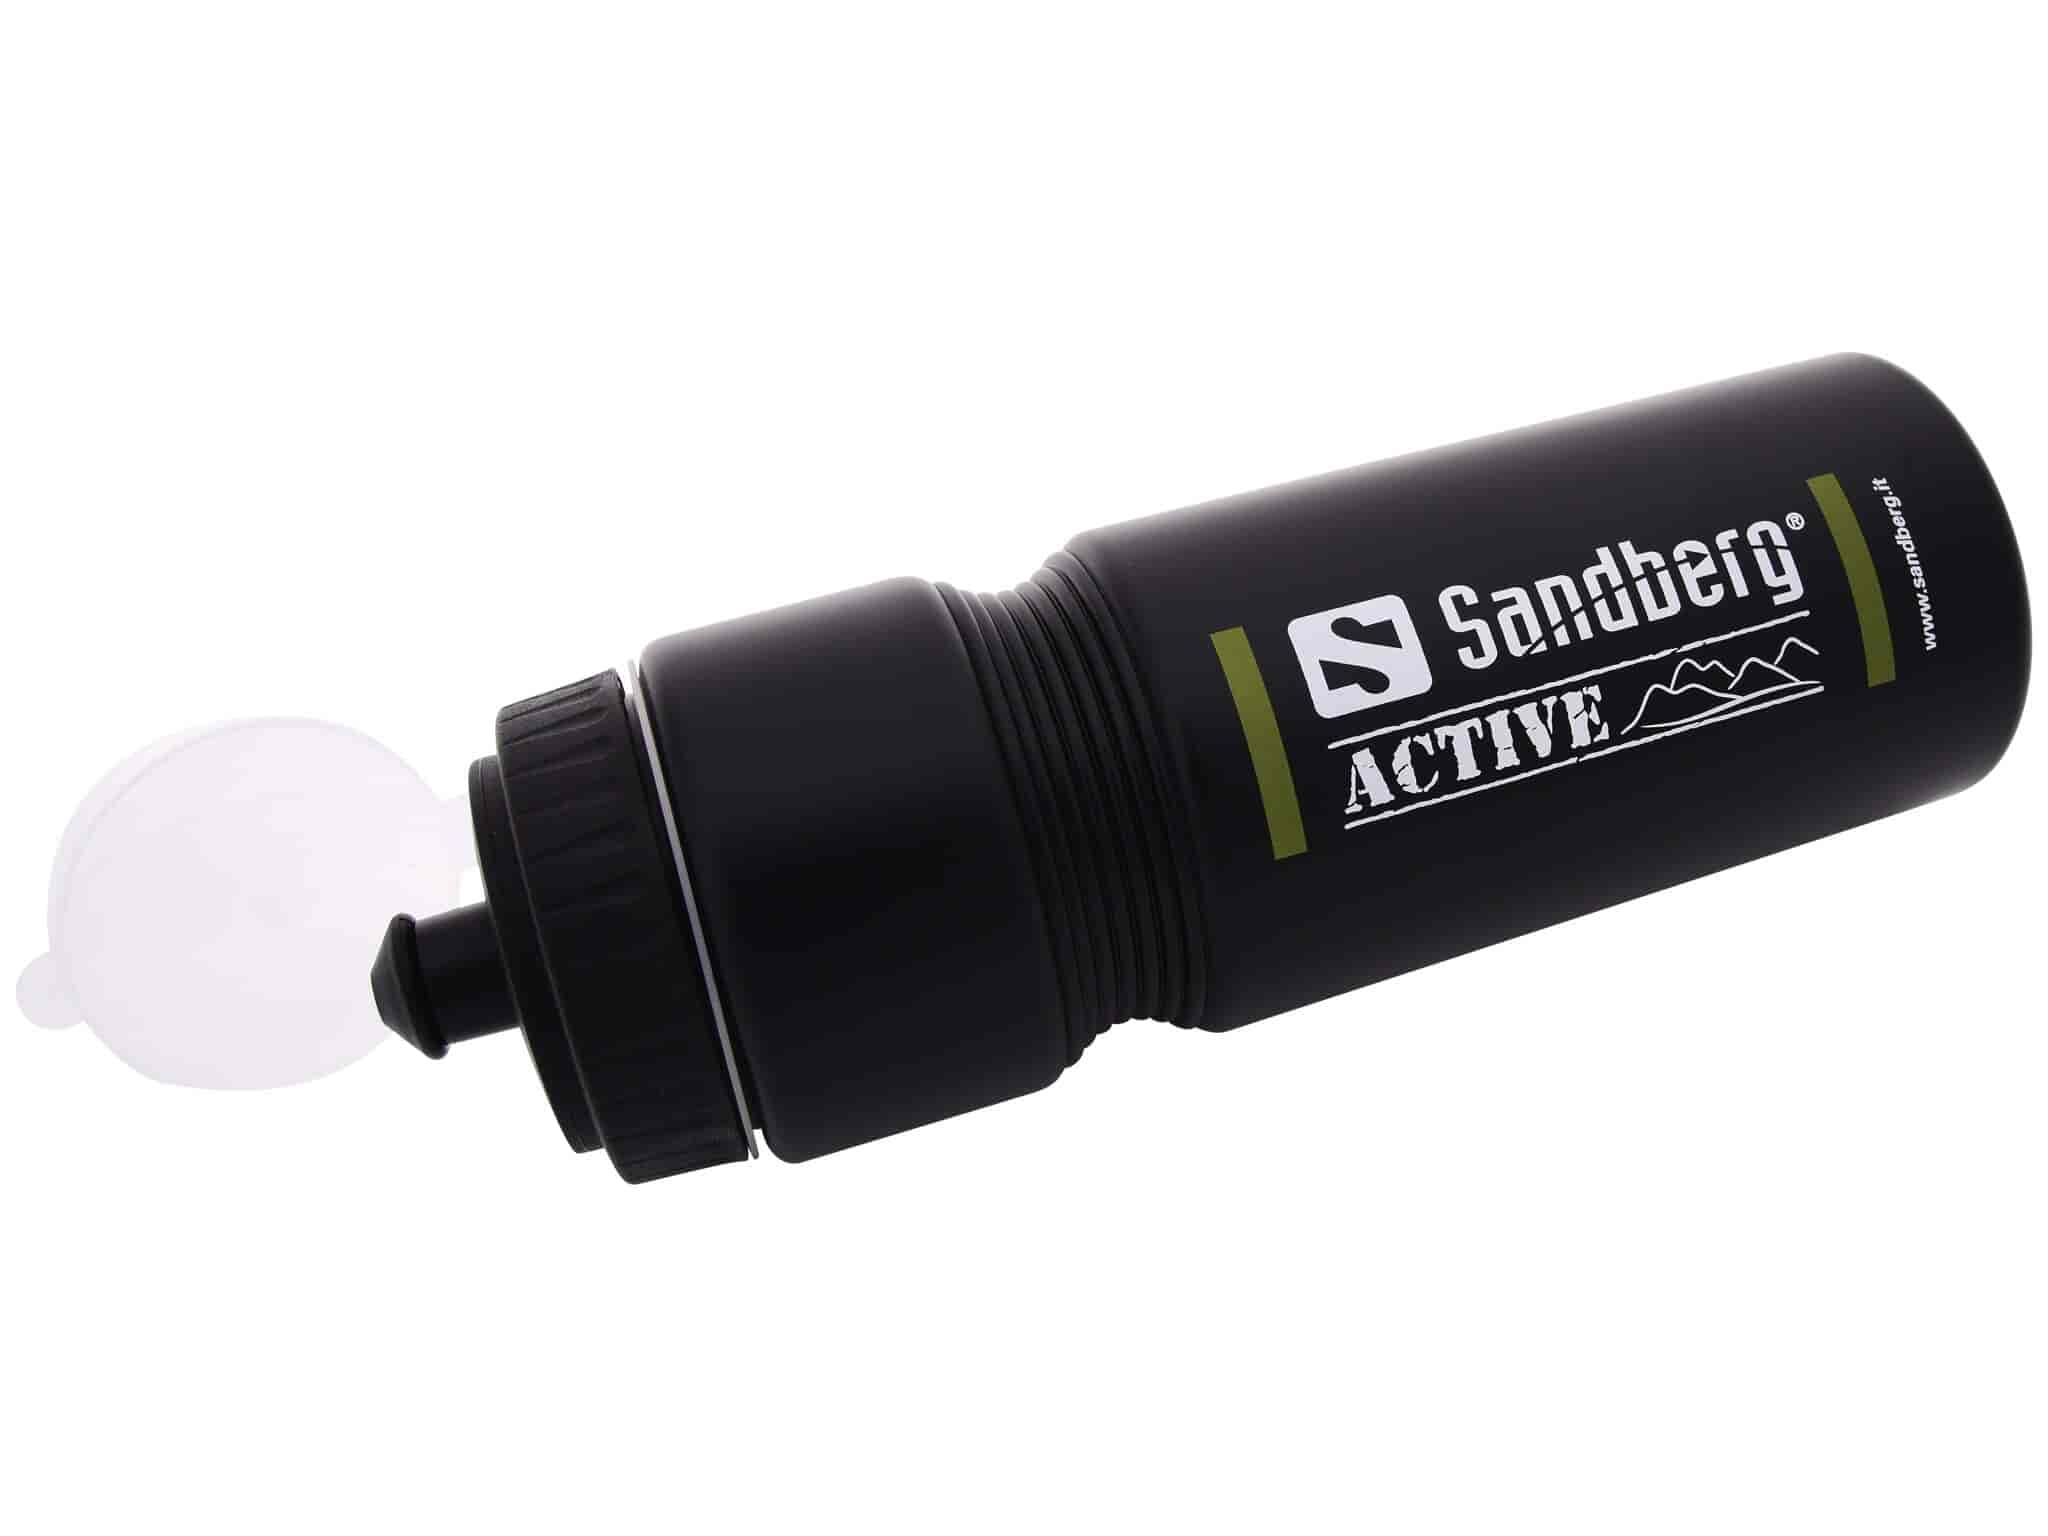 Sandberg Active Sports Drinking BottleSmart sports drinking bottle with 750 ml capacity. Withstands washing in dishwasher.Sandberg